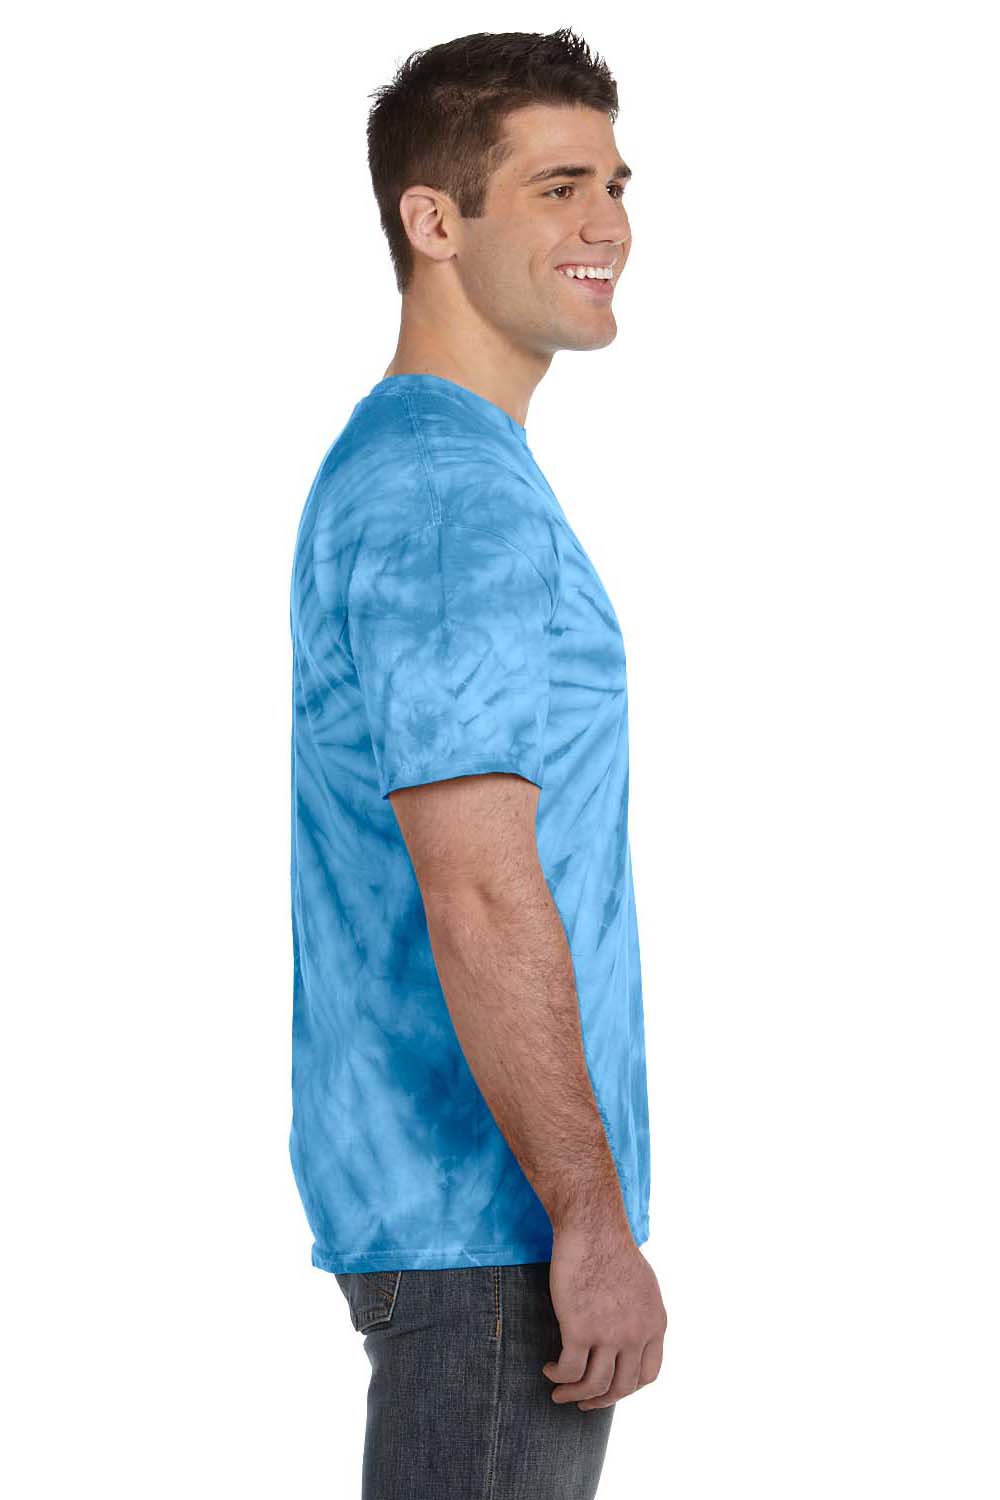 Tie-Dye CD101 Mens Short Sleeve Crewneck T-Shirt Turquoise Blue Side